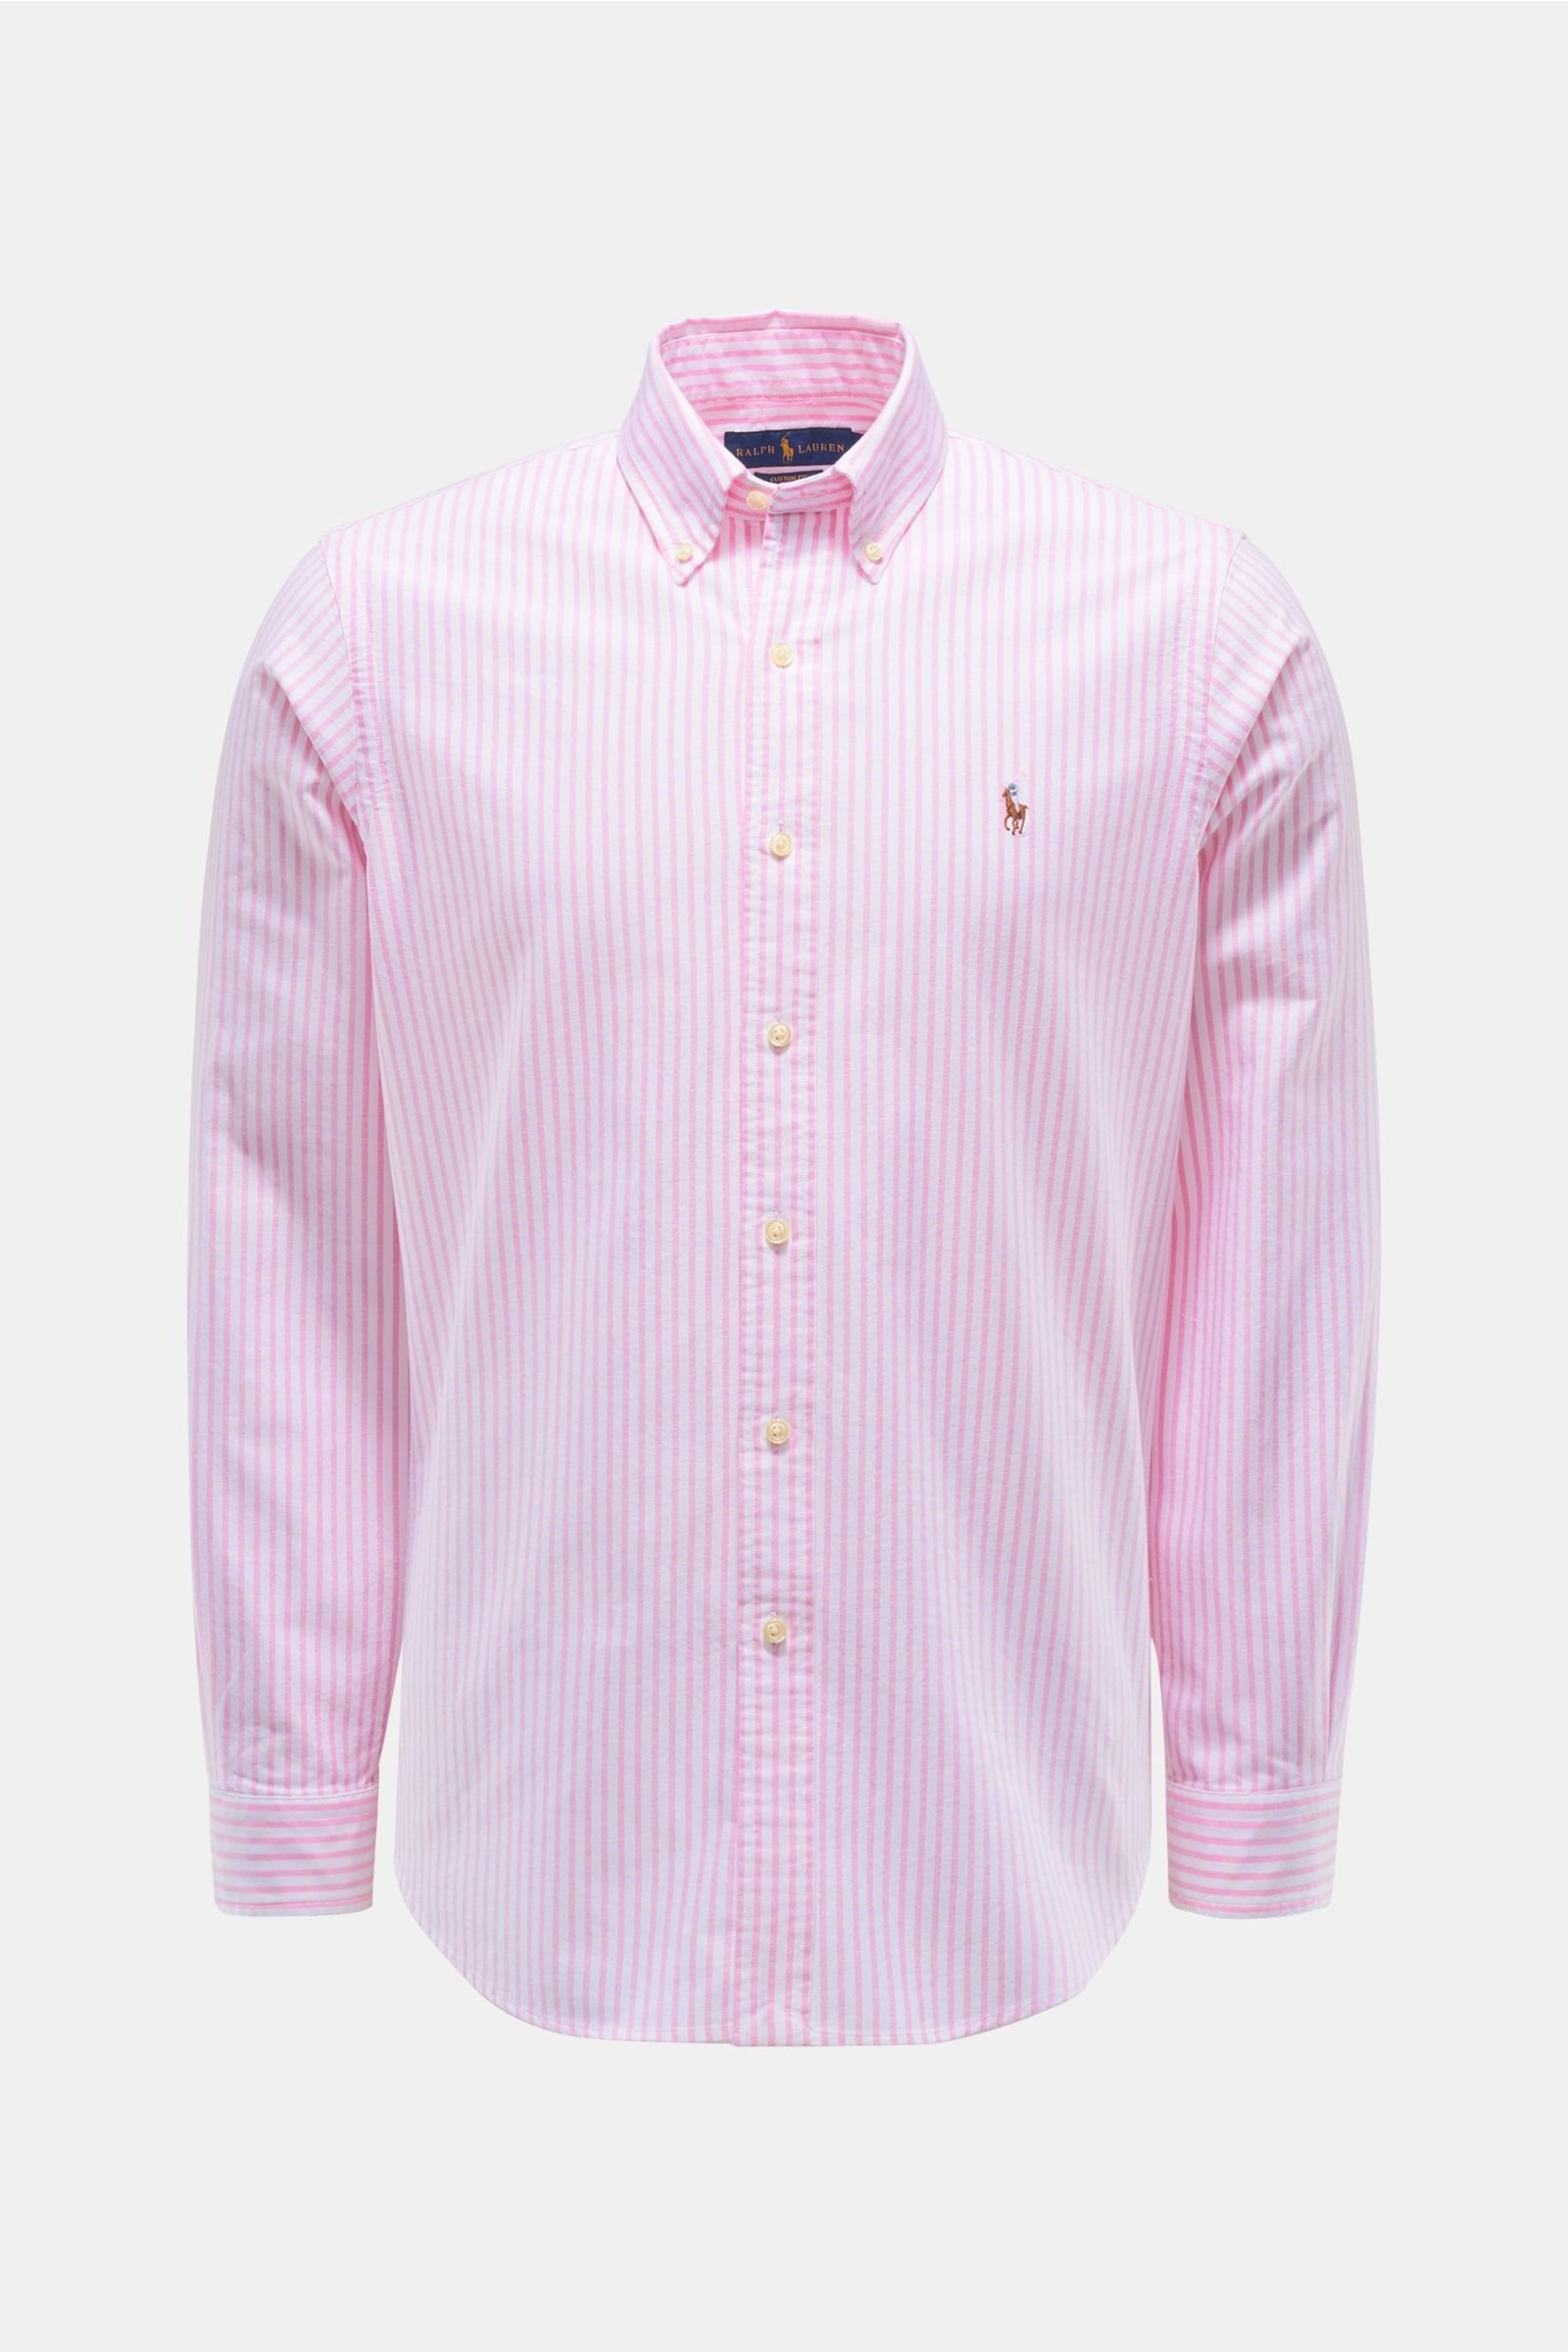 Oxford shirt button-down collar rose/white striped